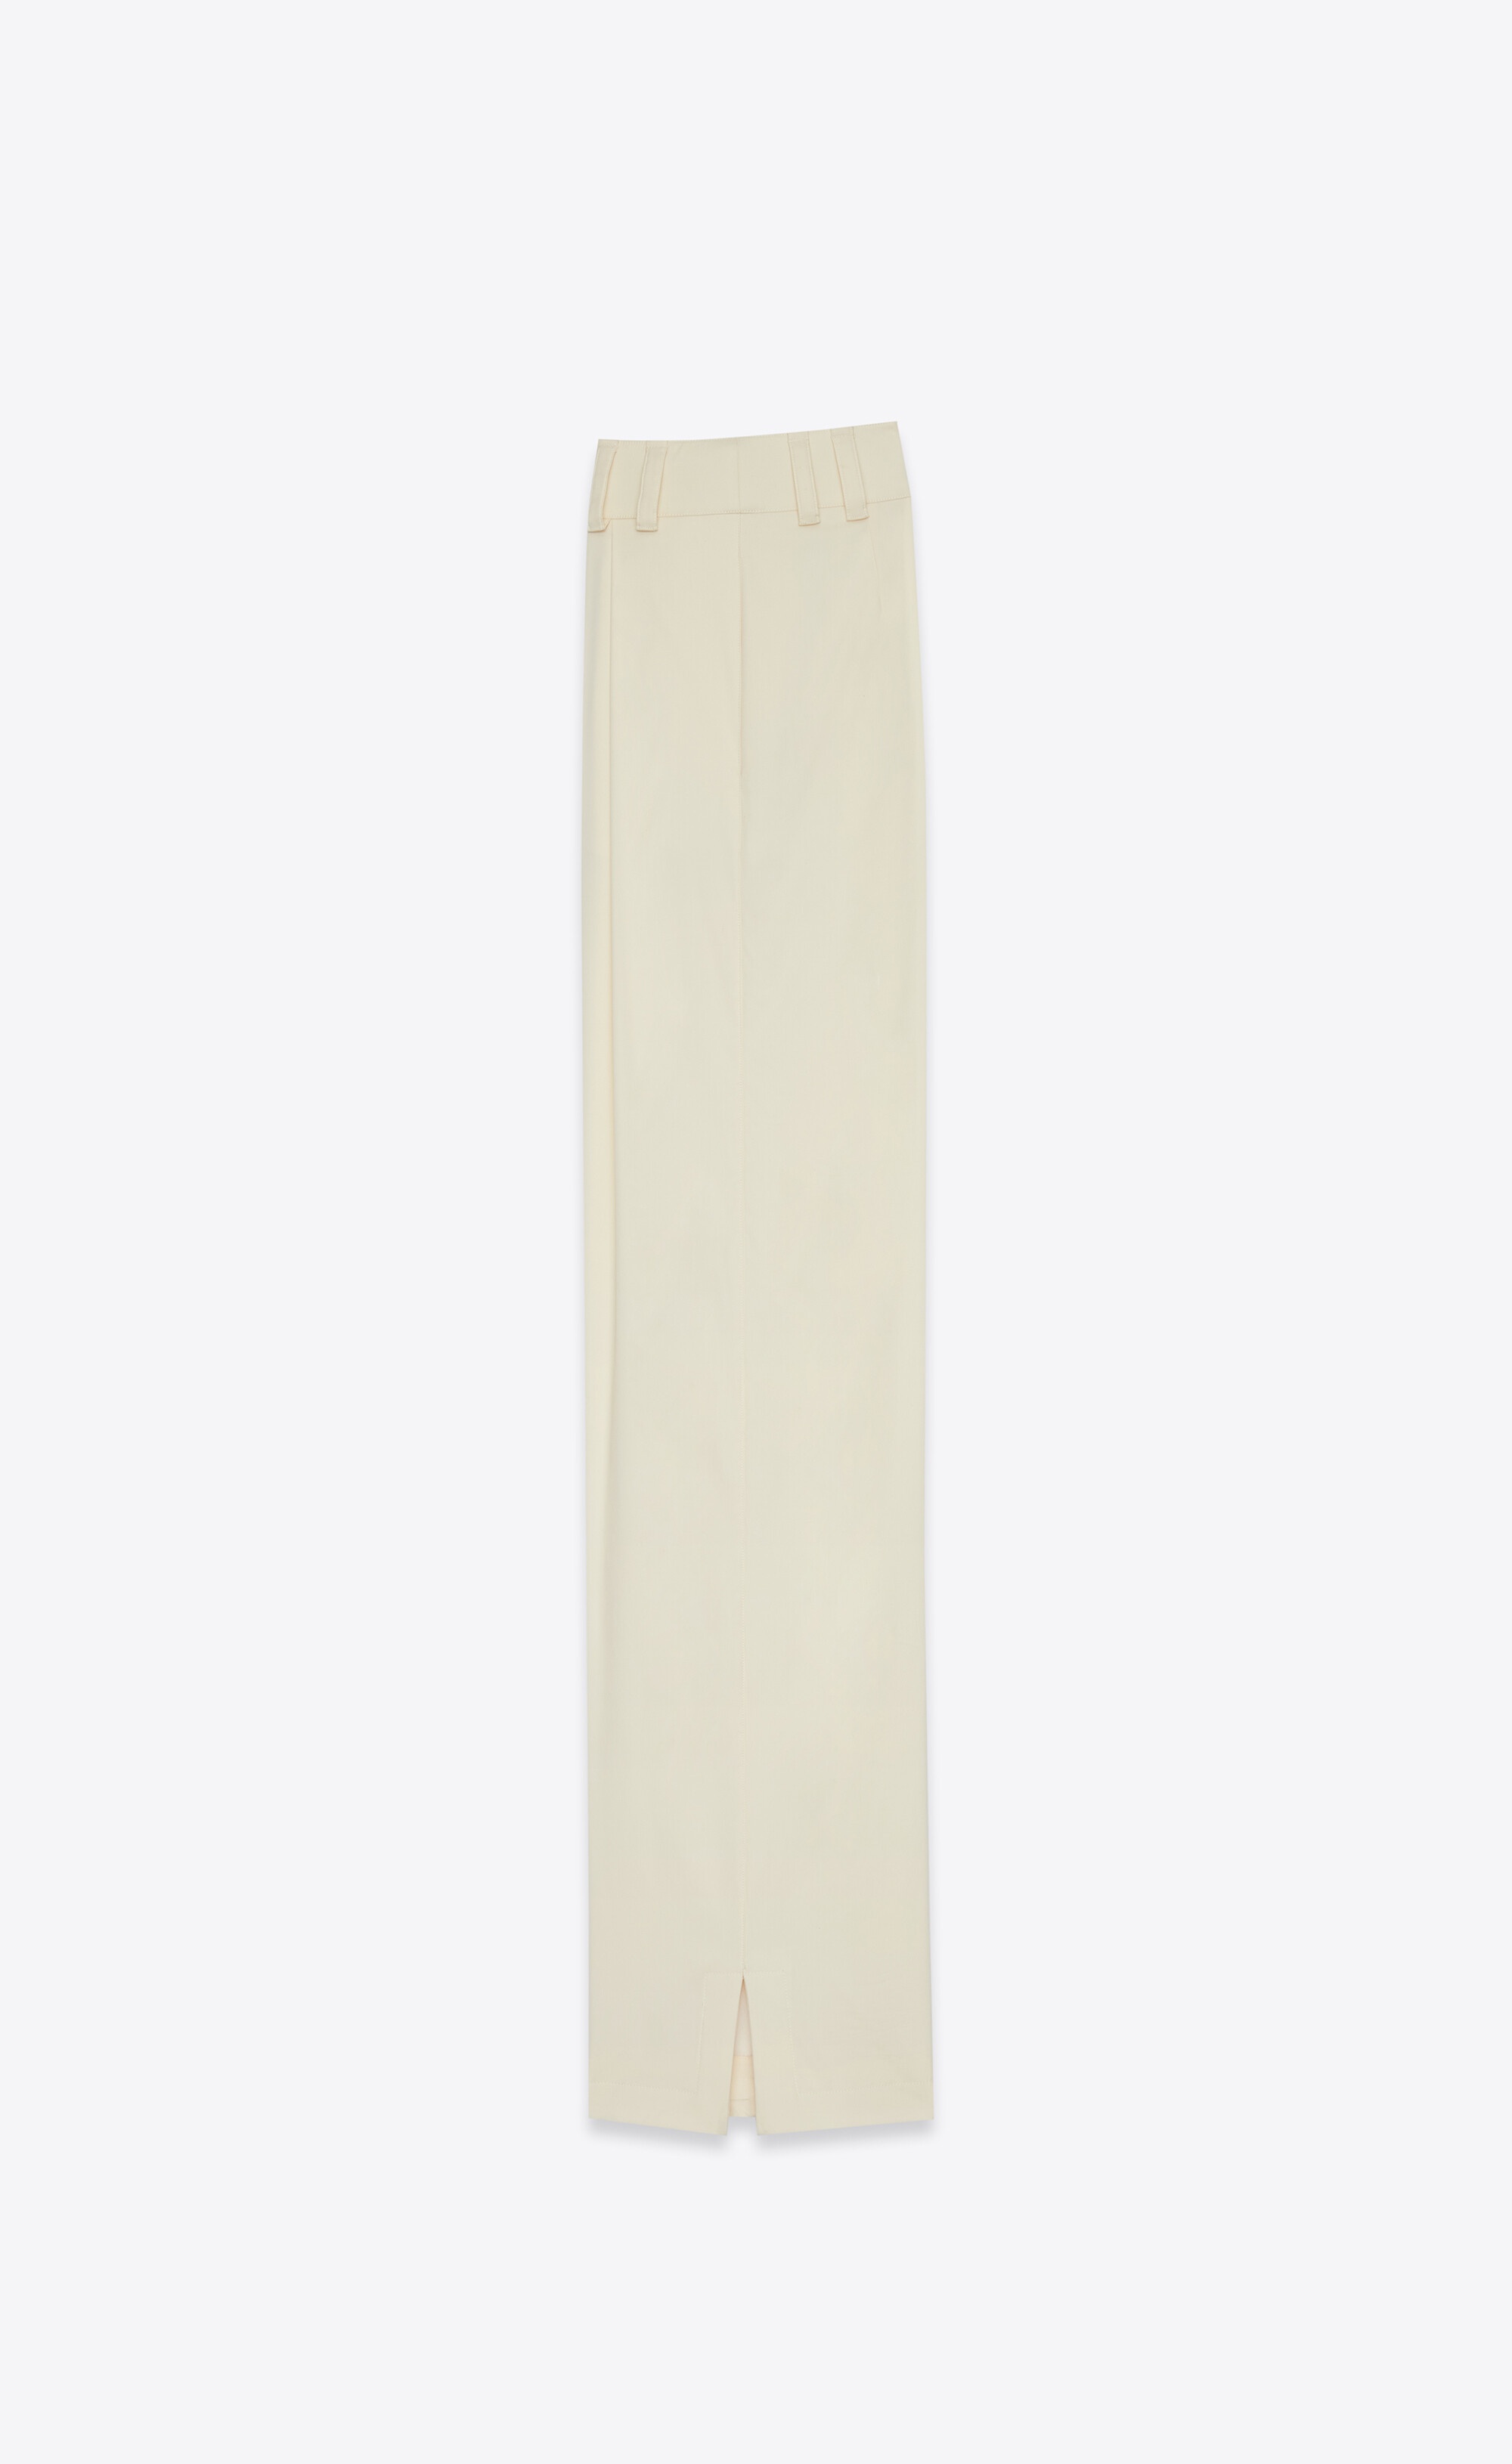 pants in cotton sateen - 2